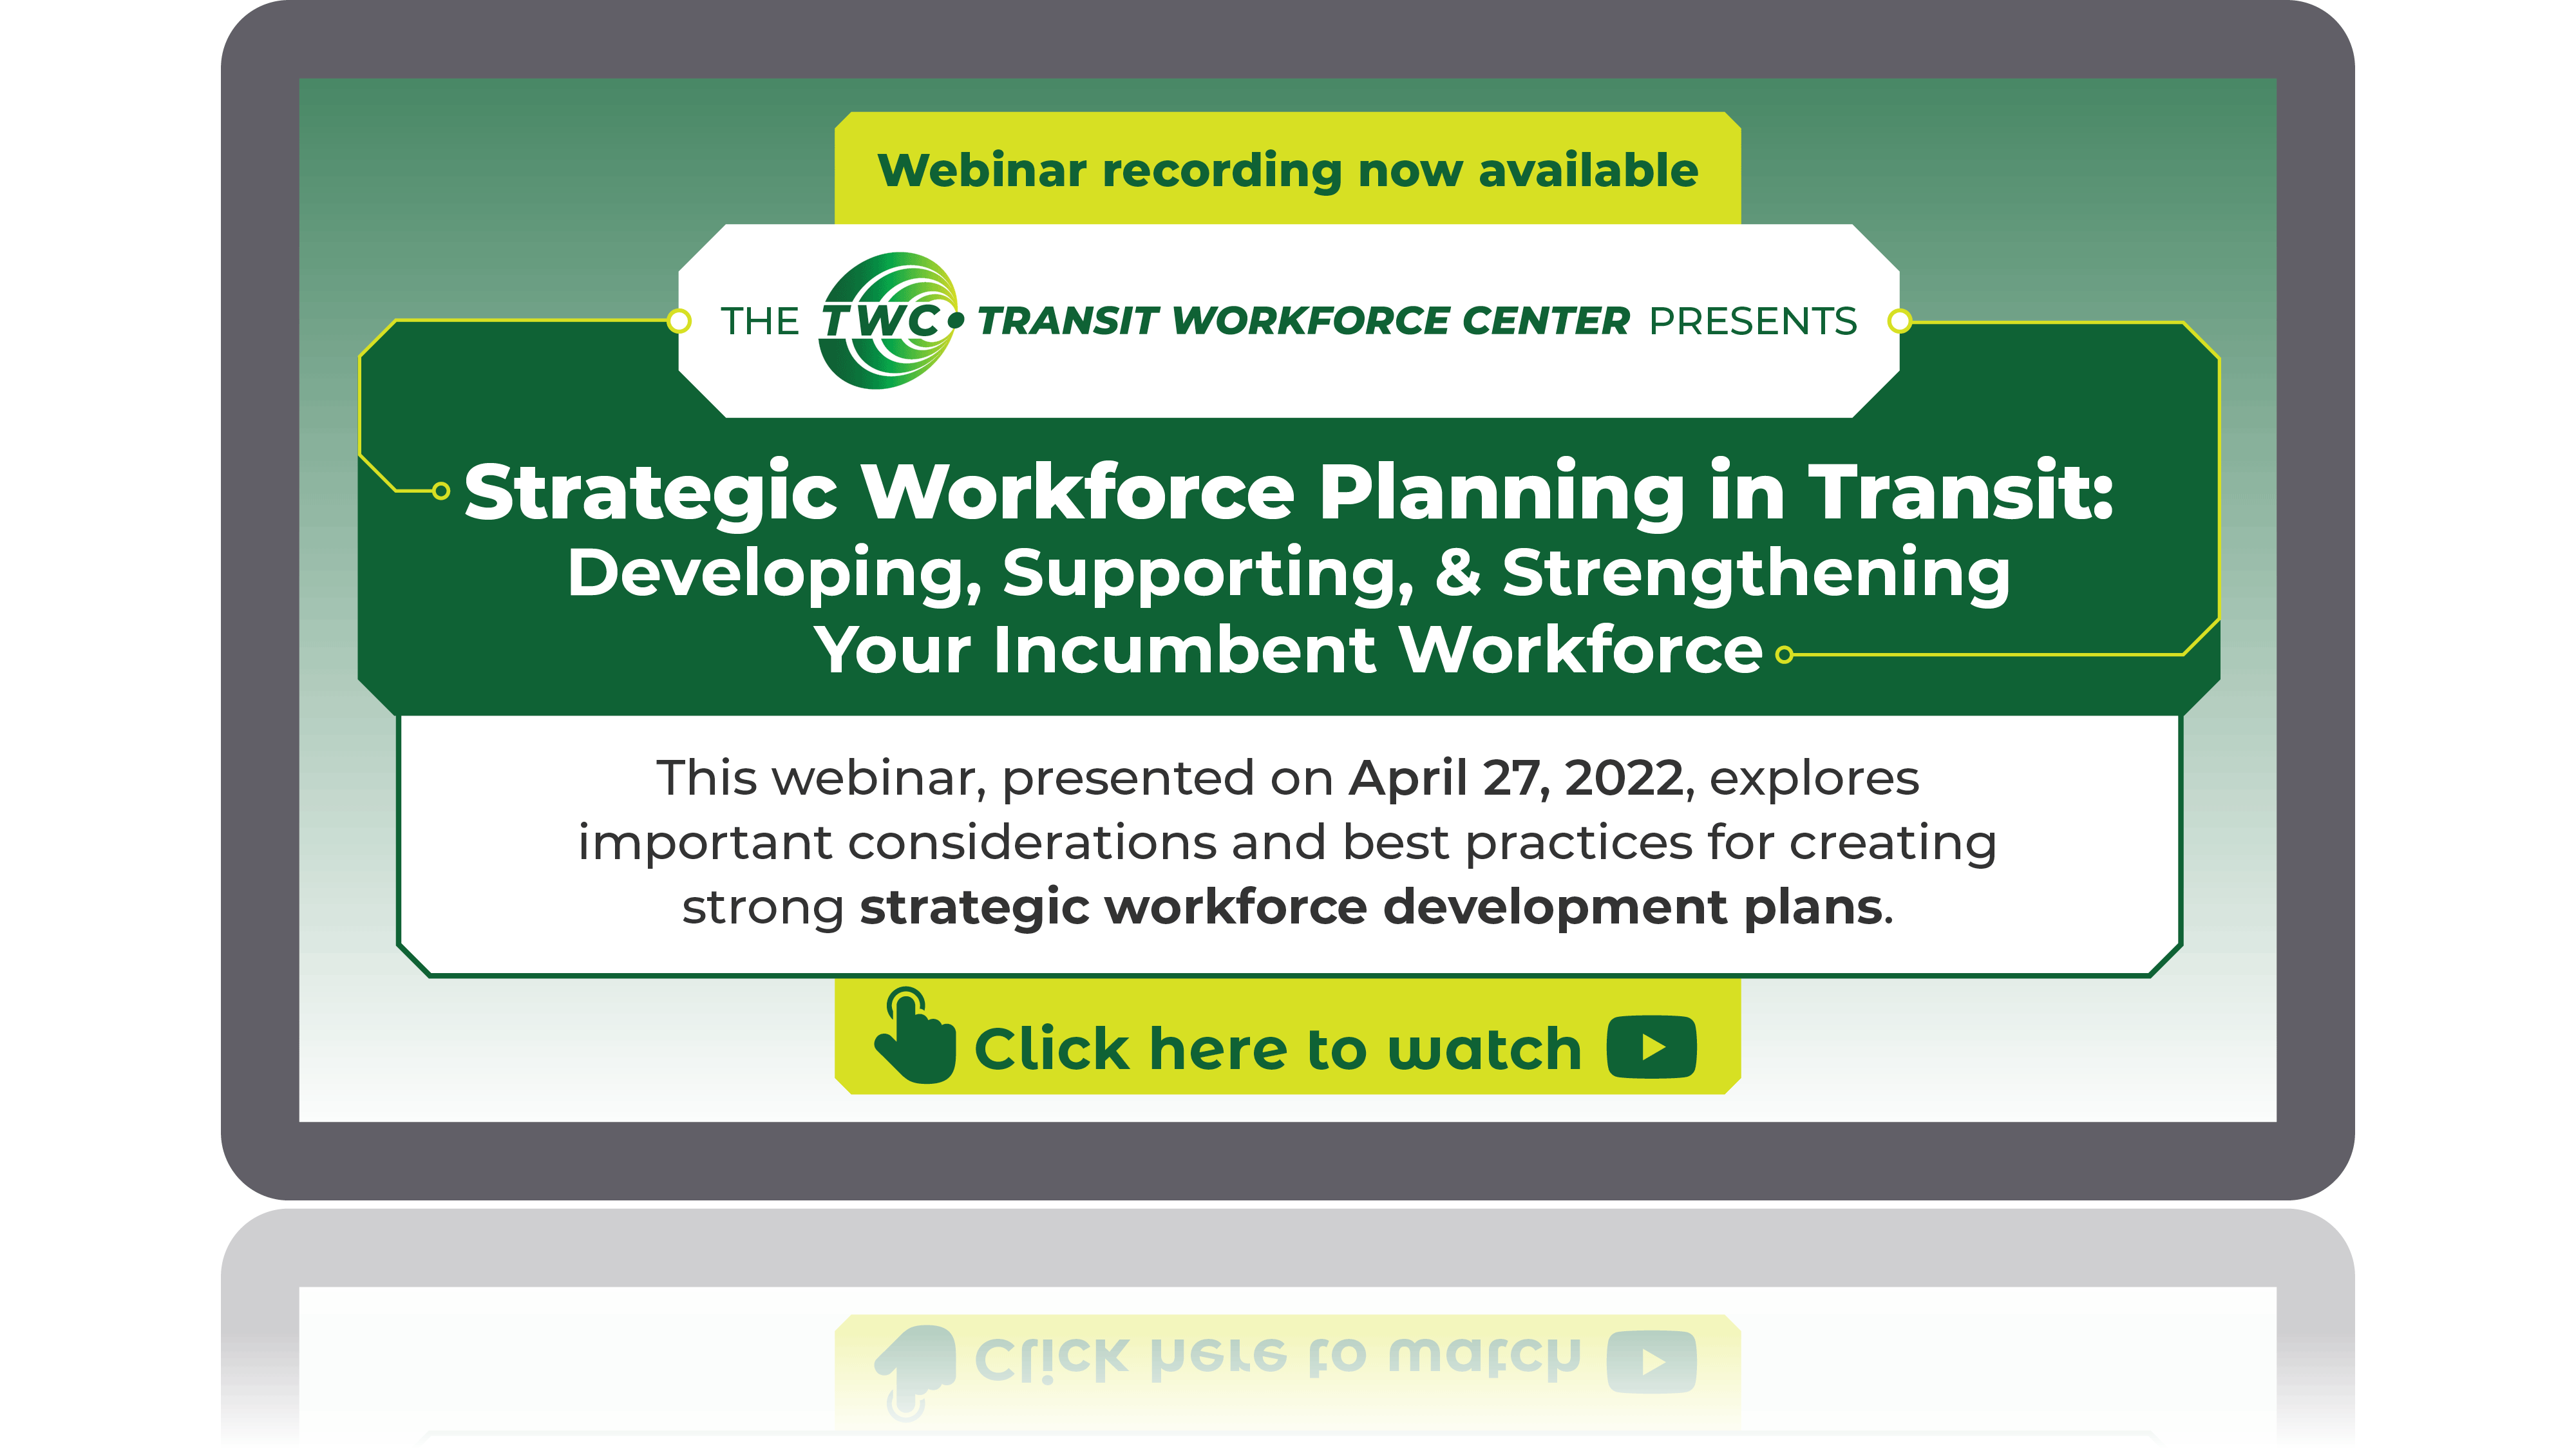 TWC Holds First in Series of Strategic Workforce Planning Webinars